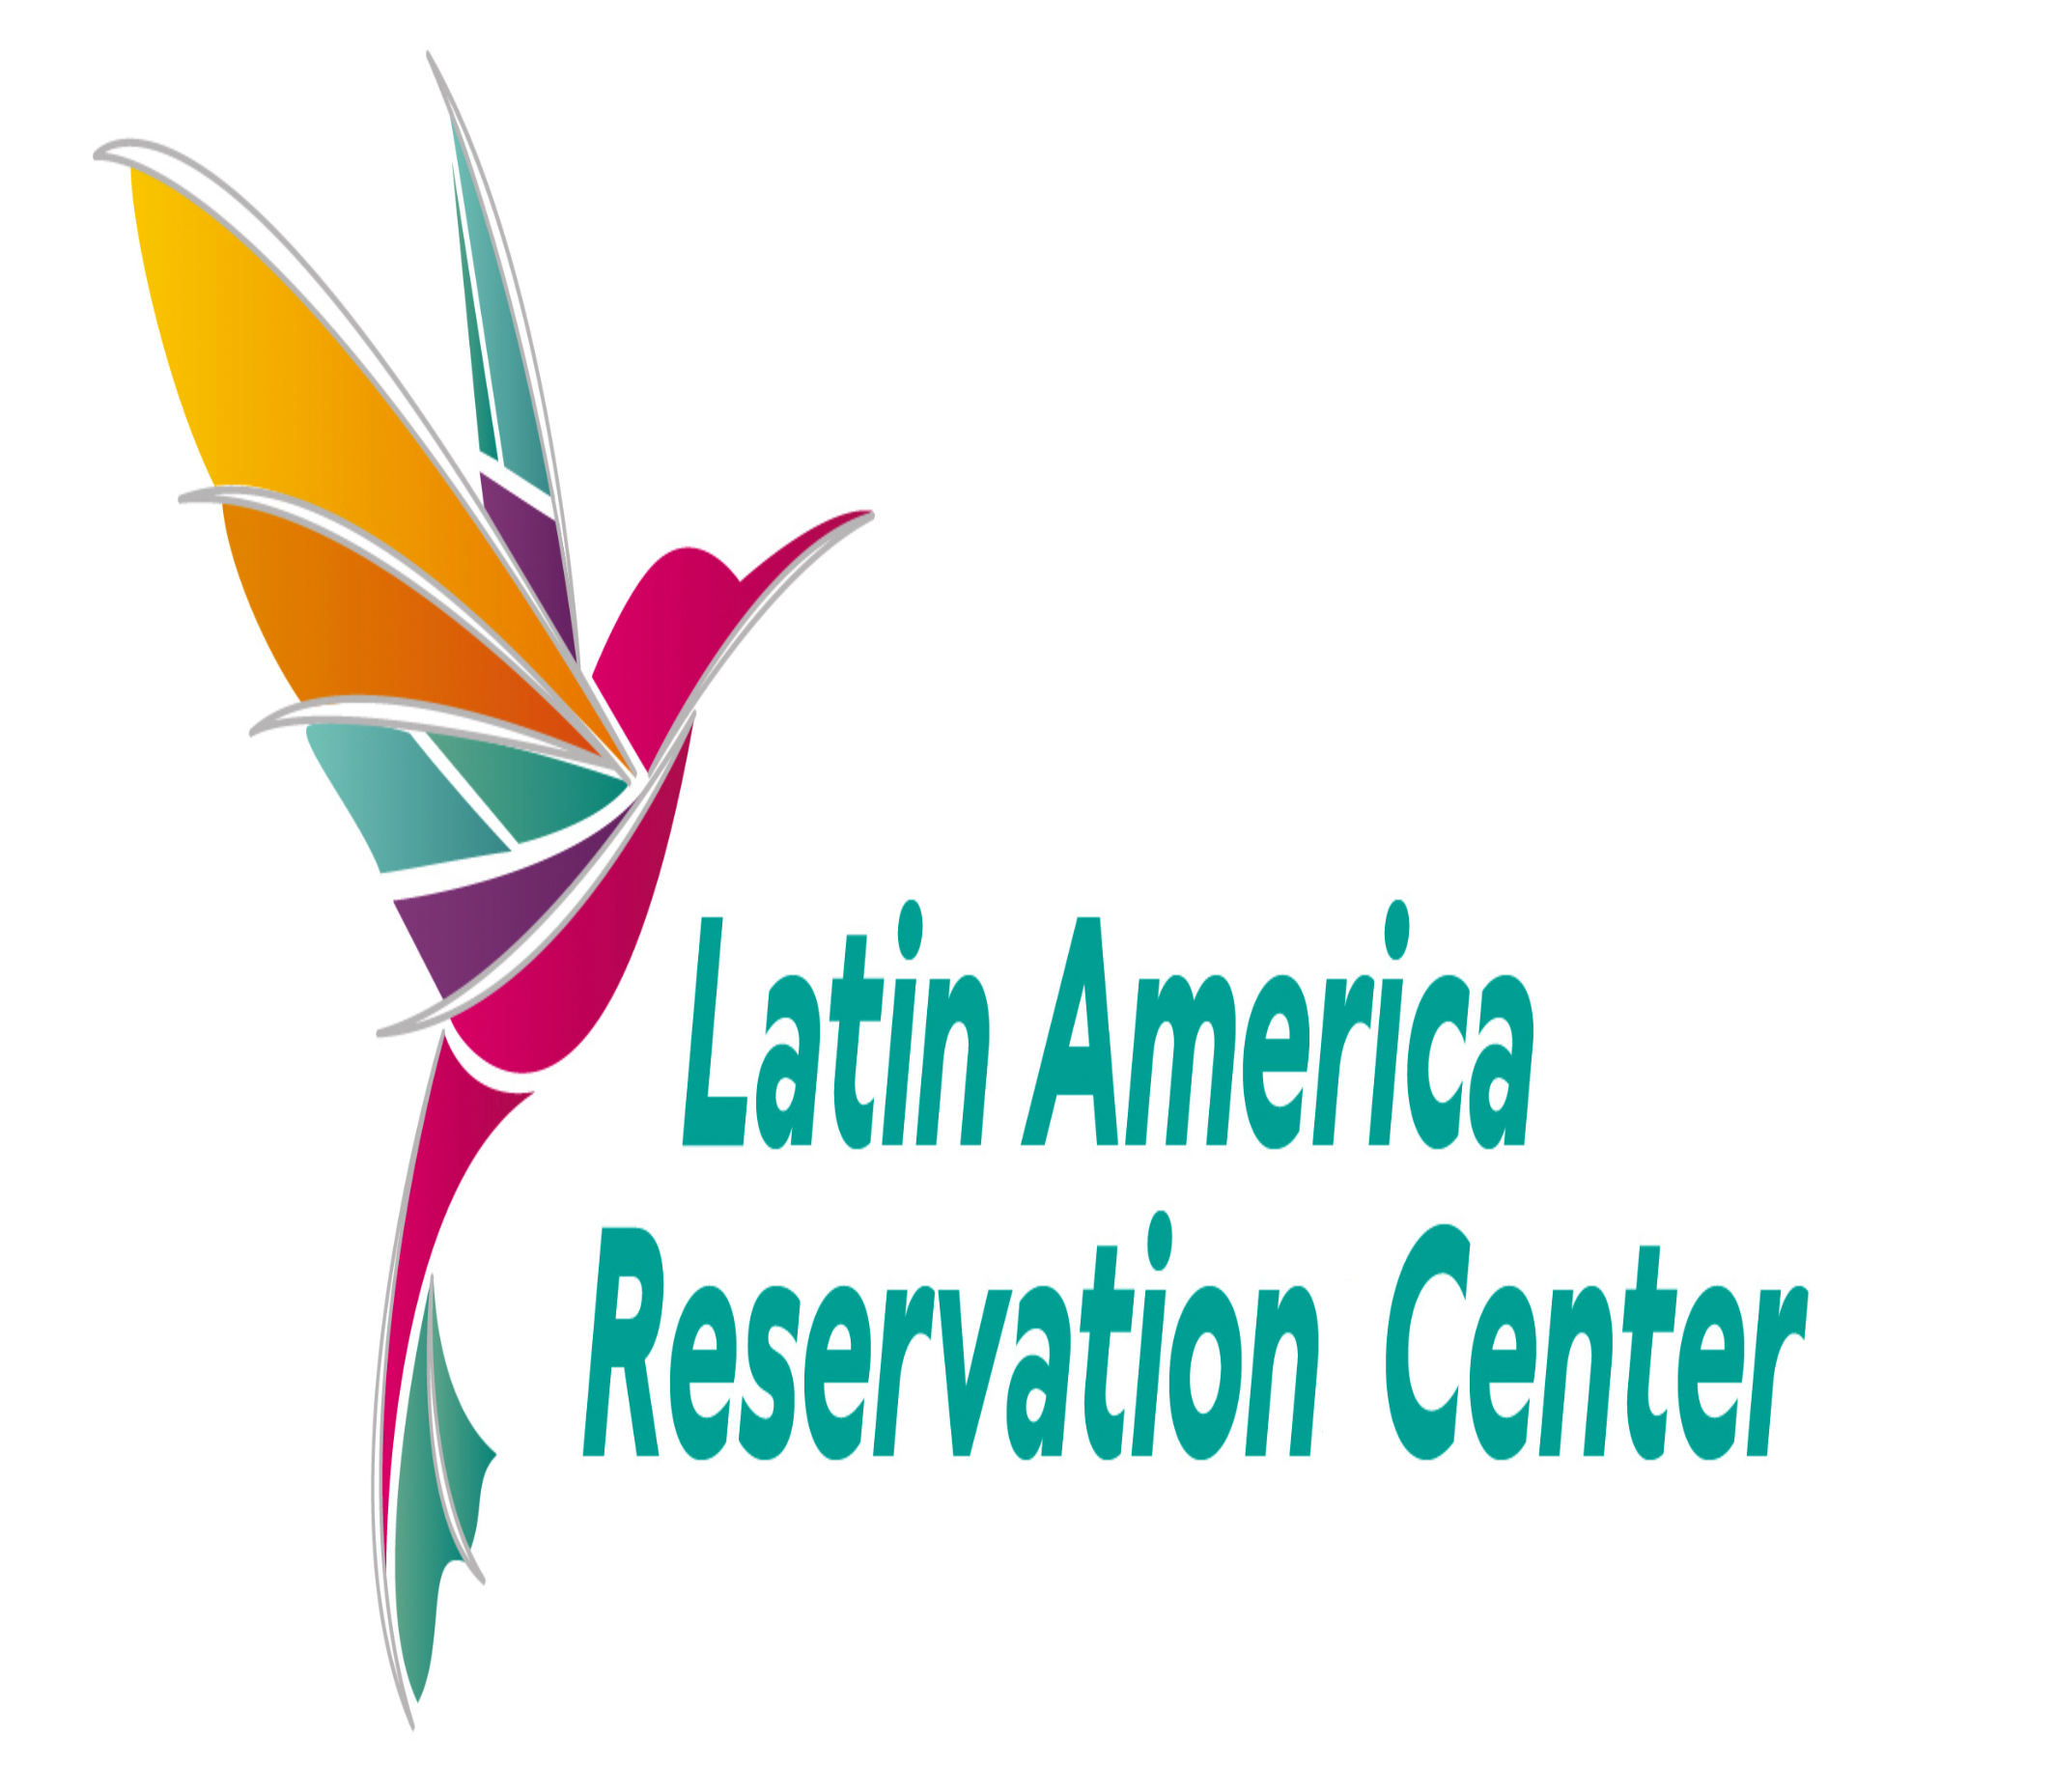 Latin America Reservation Center